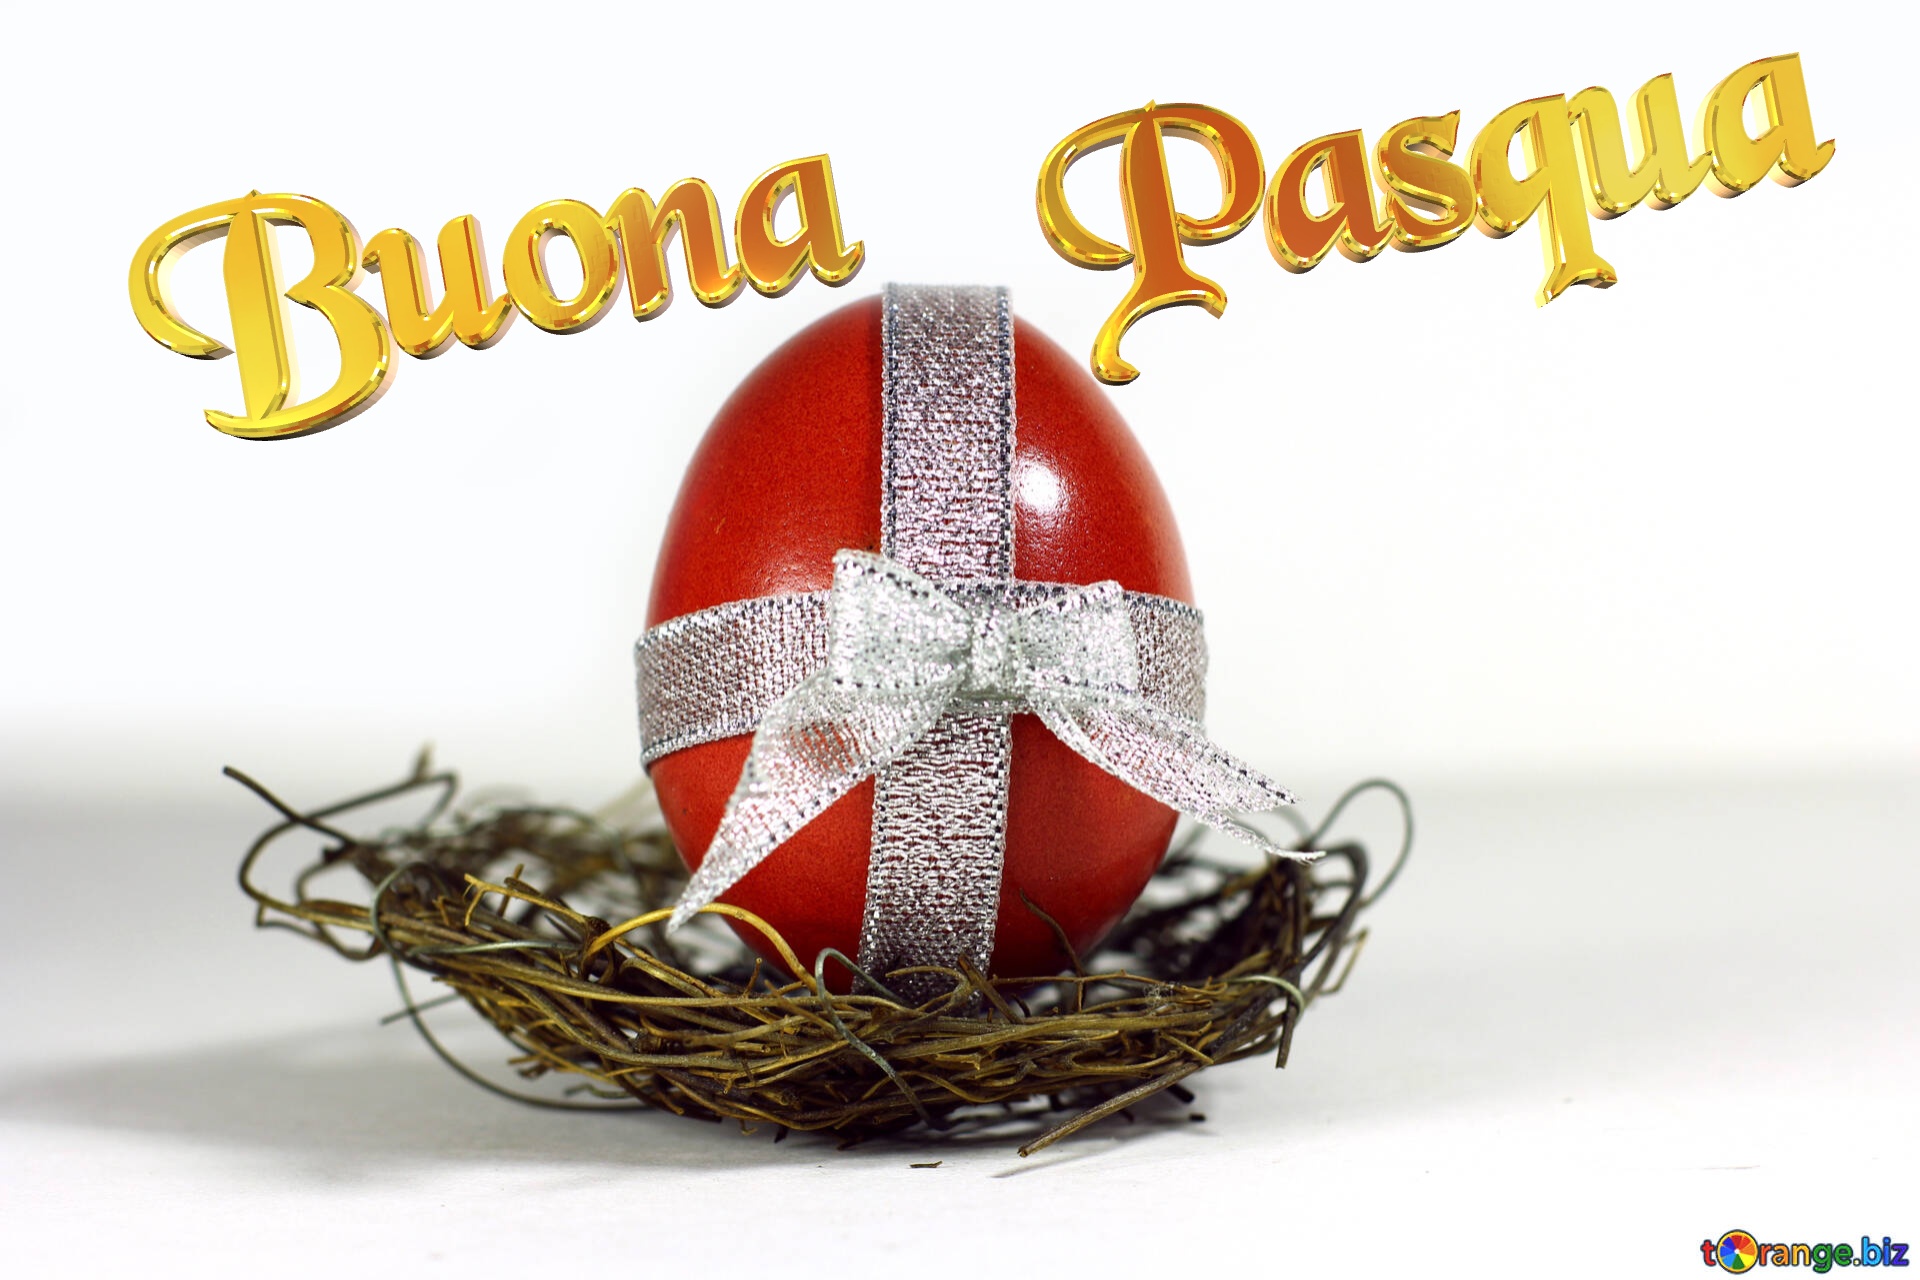 Buona                Pasqua  Eggs easter wrapped №50273